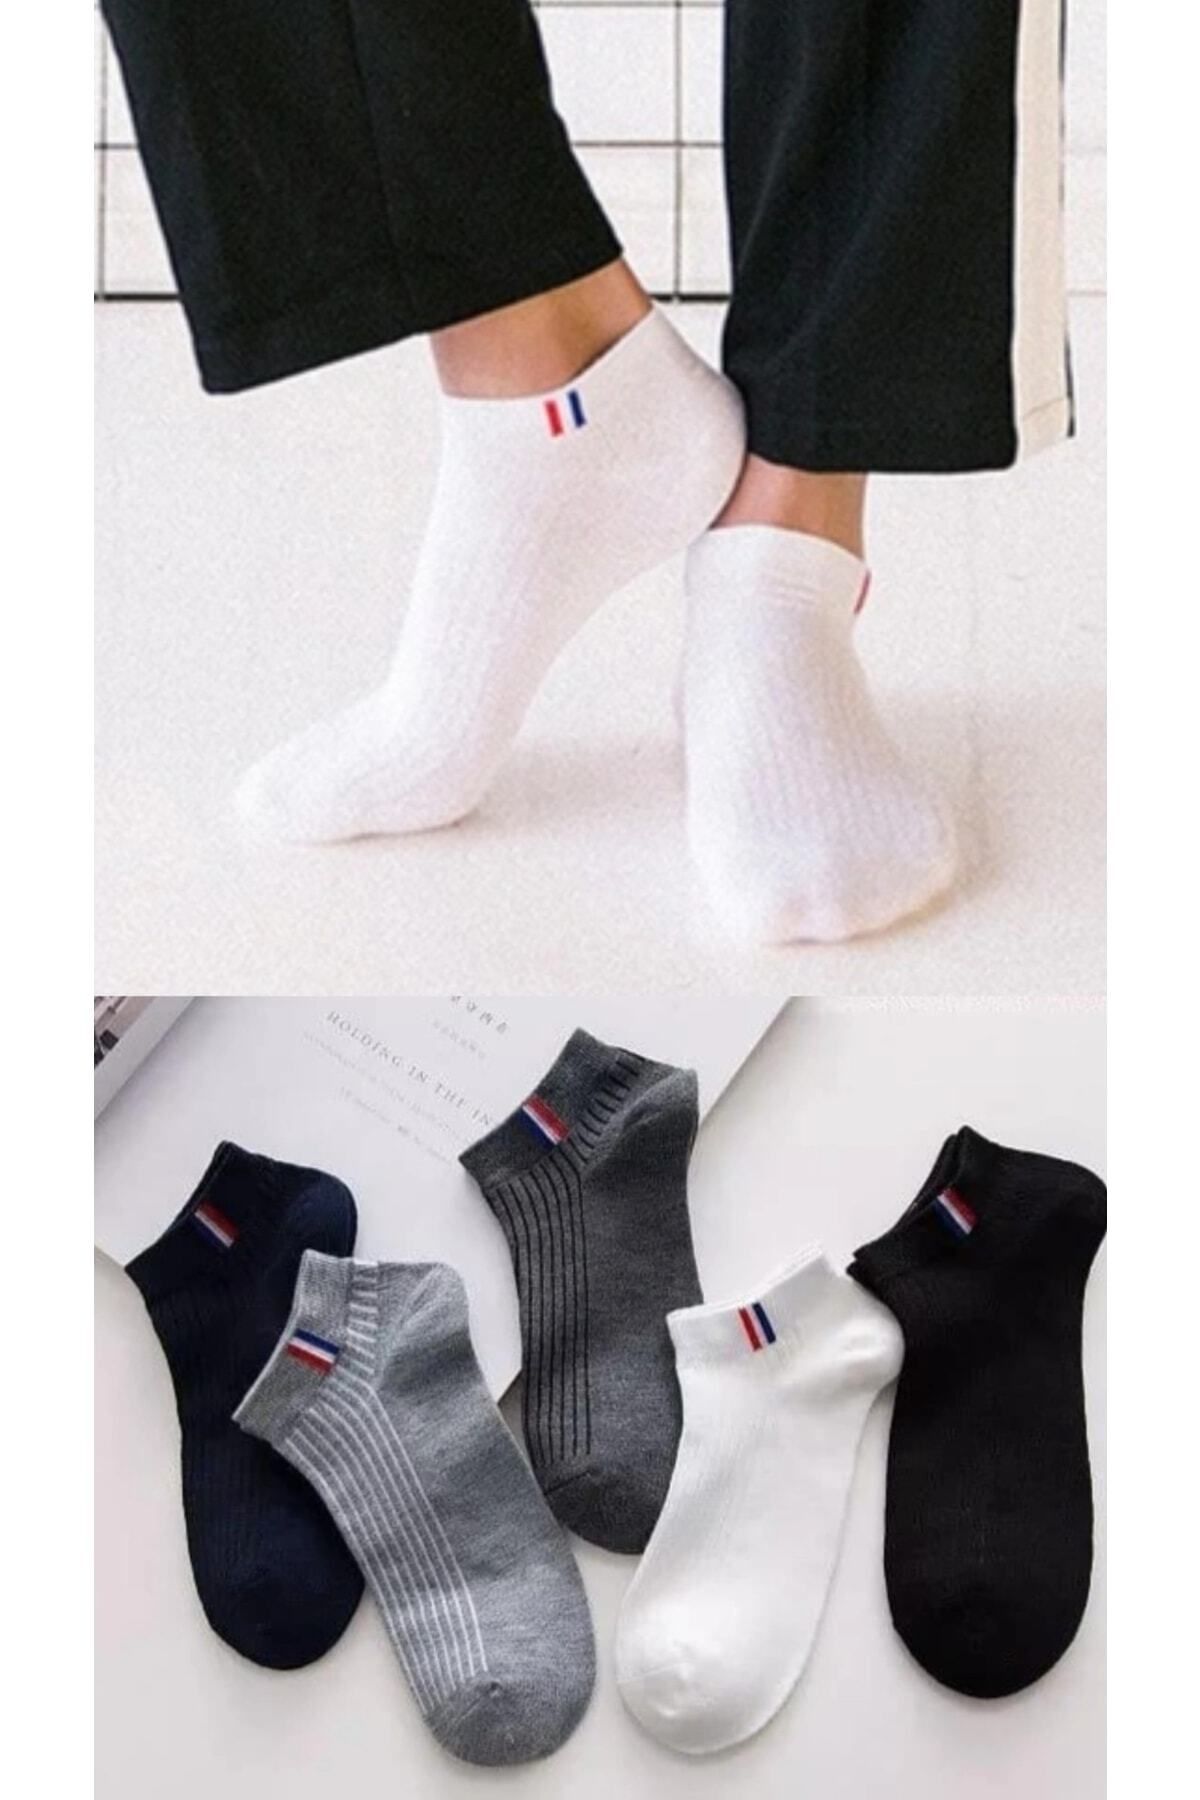 BGK 5'li Renkli Unisex Spor Patik Çorap Seti